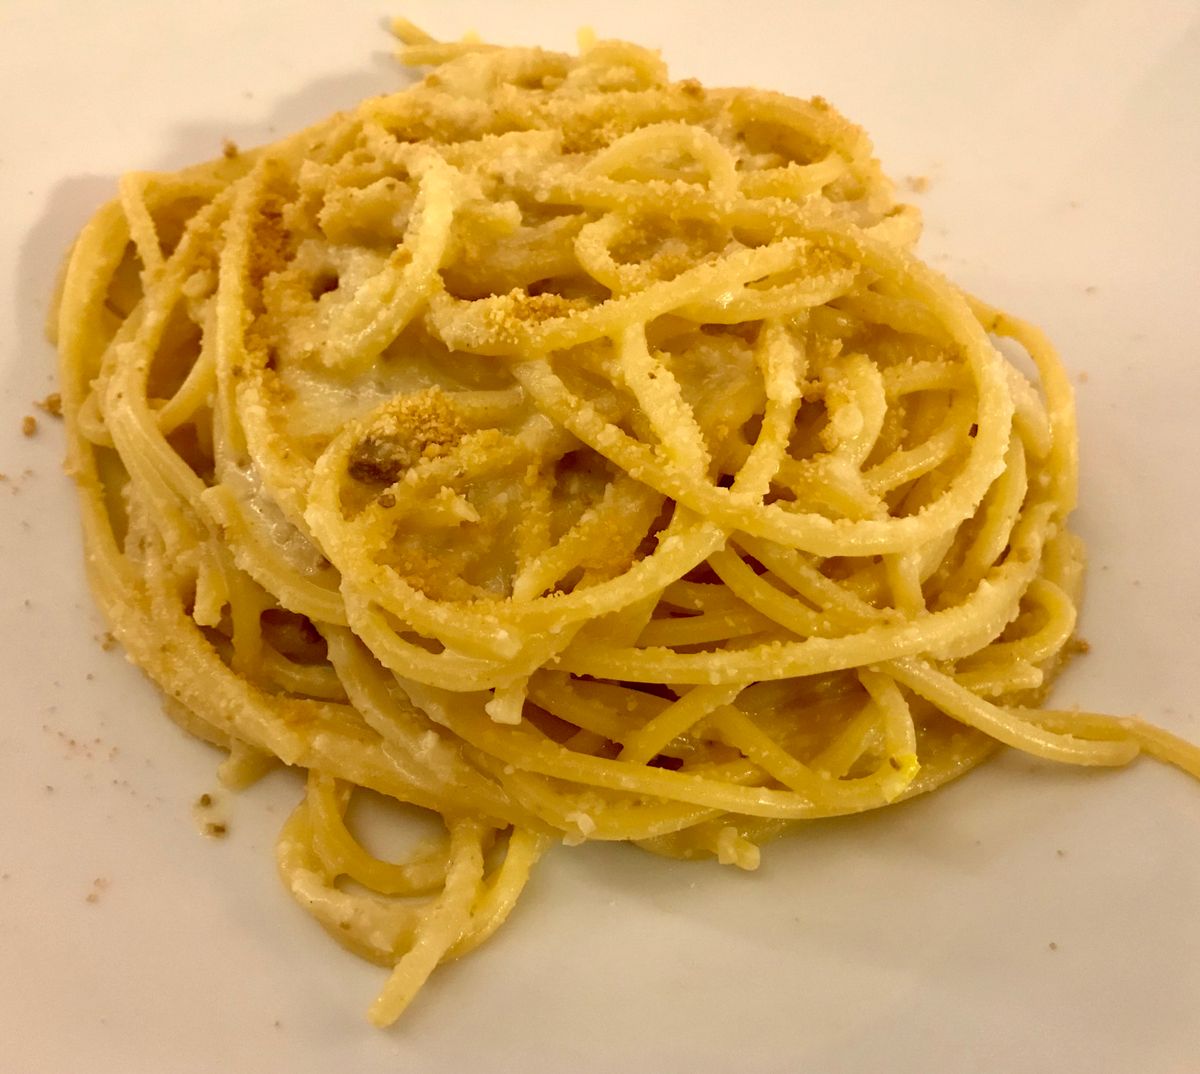 Spaghetti with Pistachio Sauce